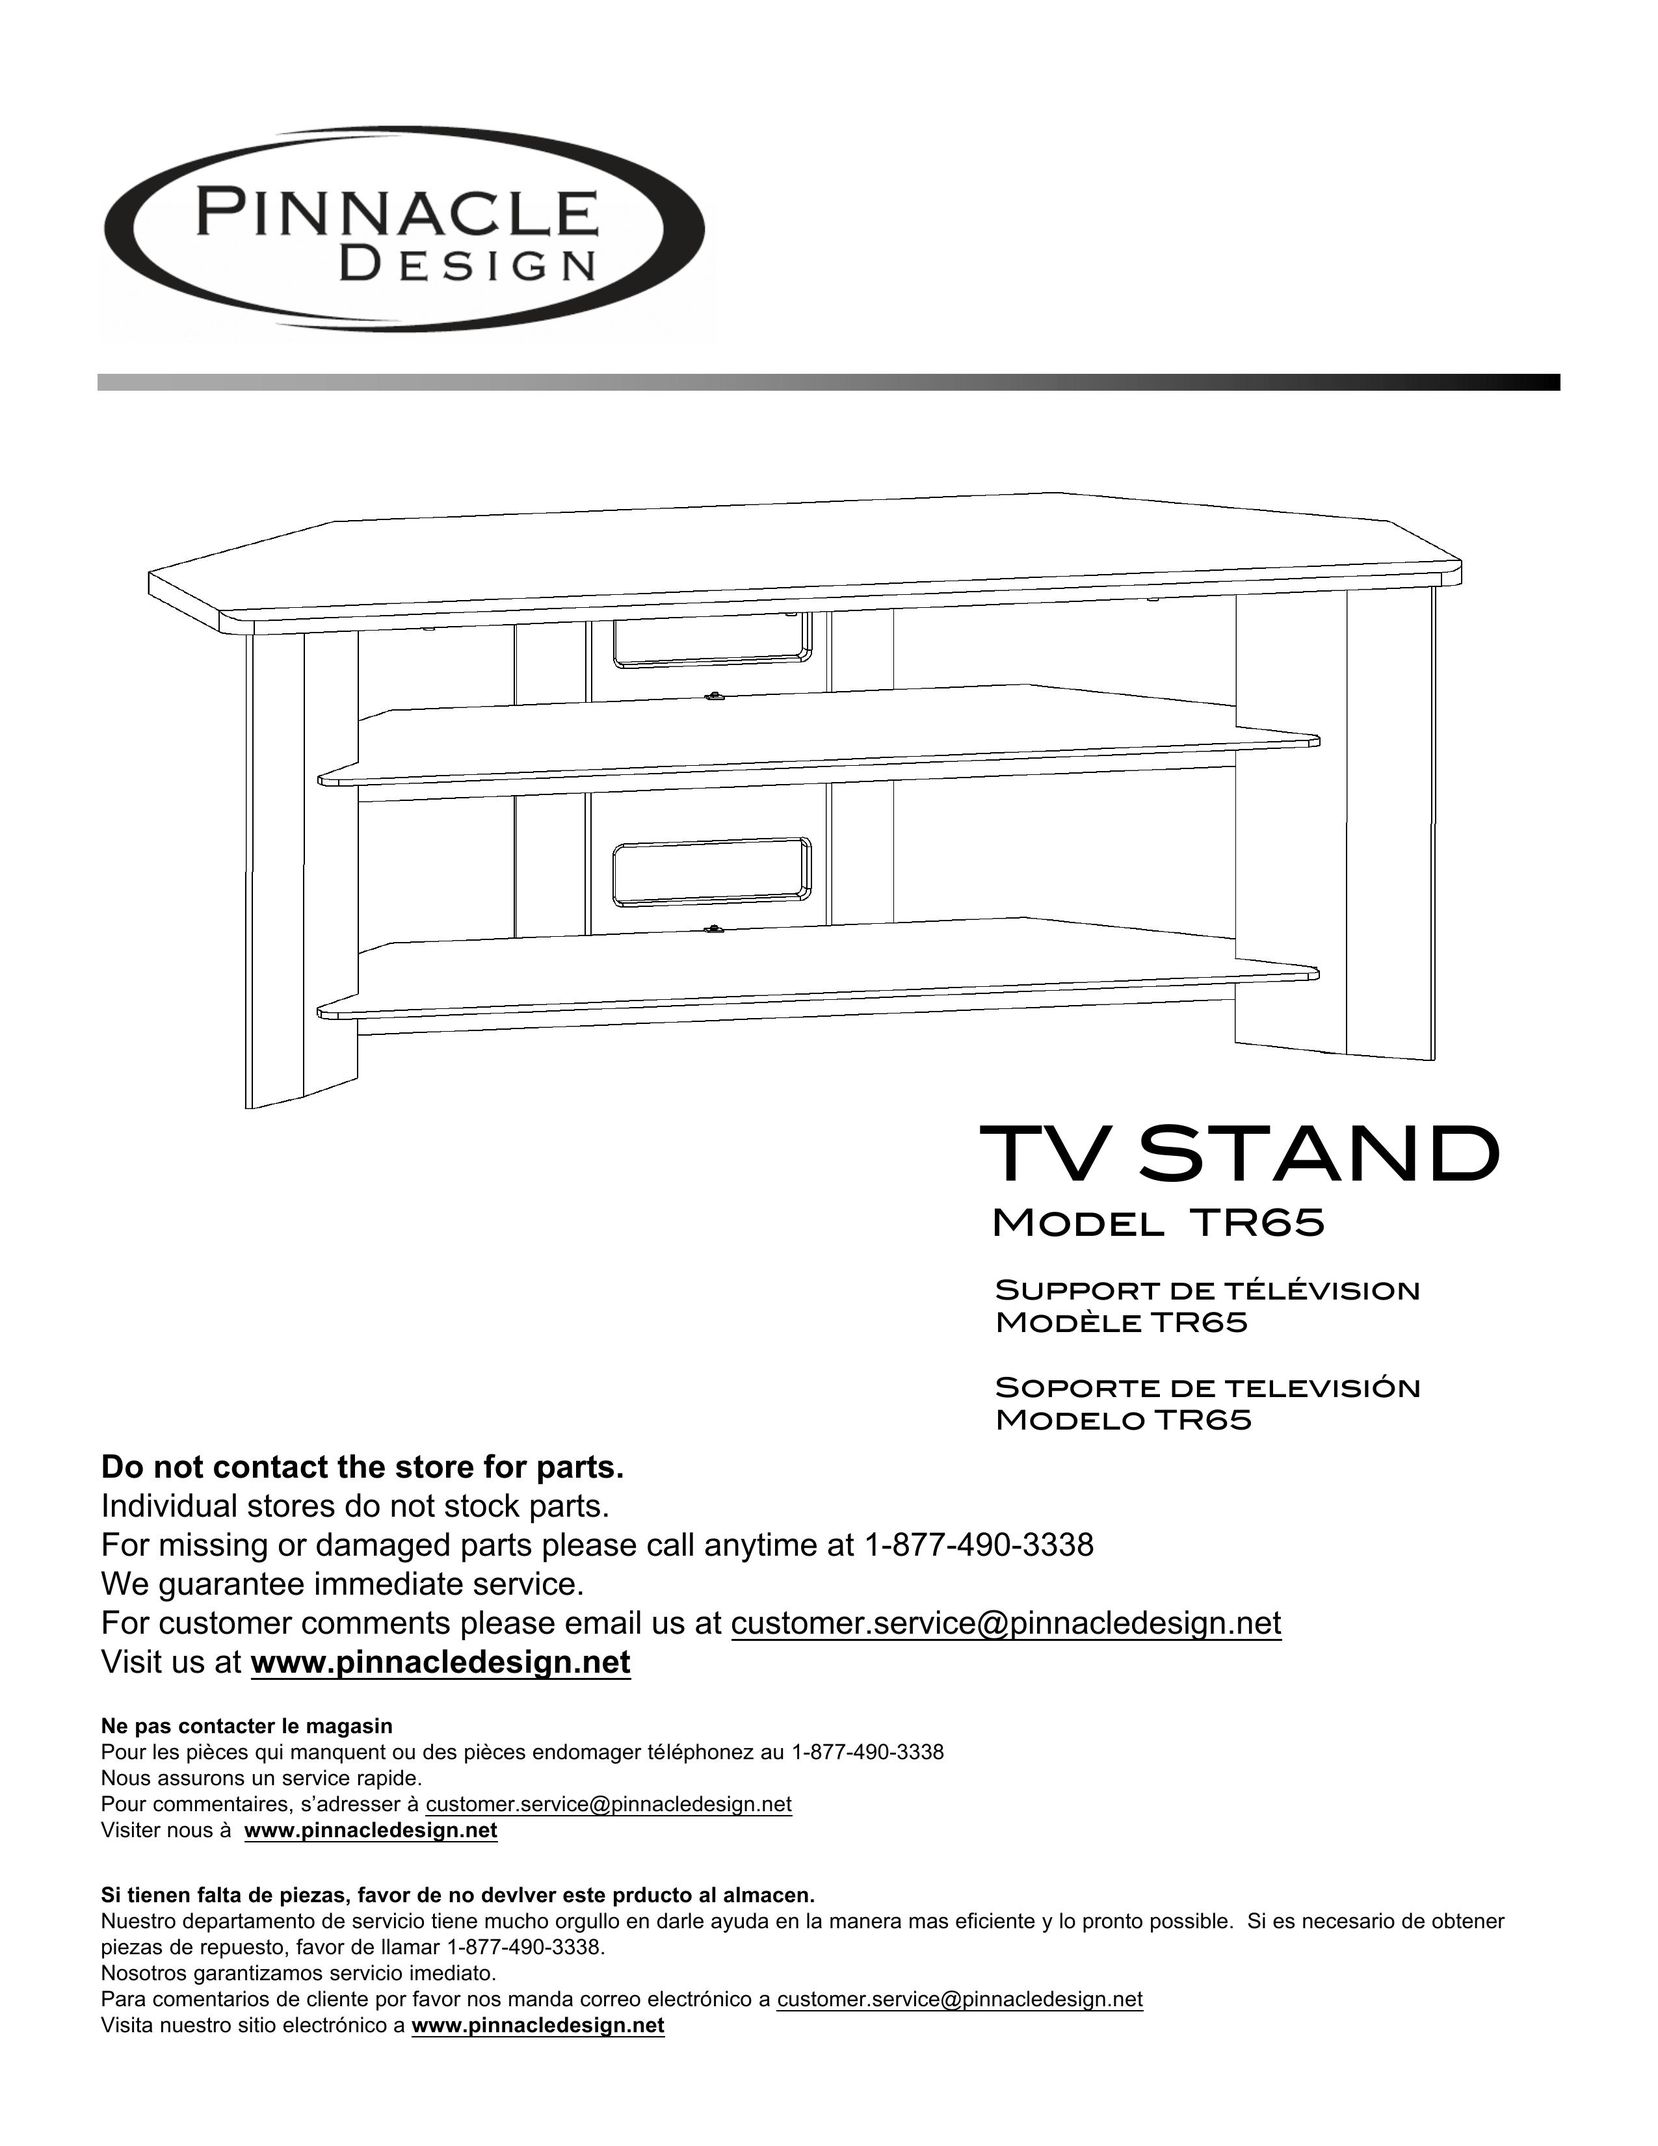 Pinnacle Design TR65 TV Video Accessories User Manual